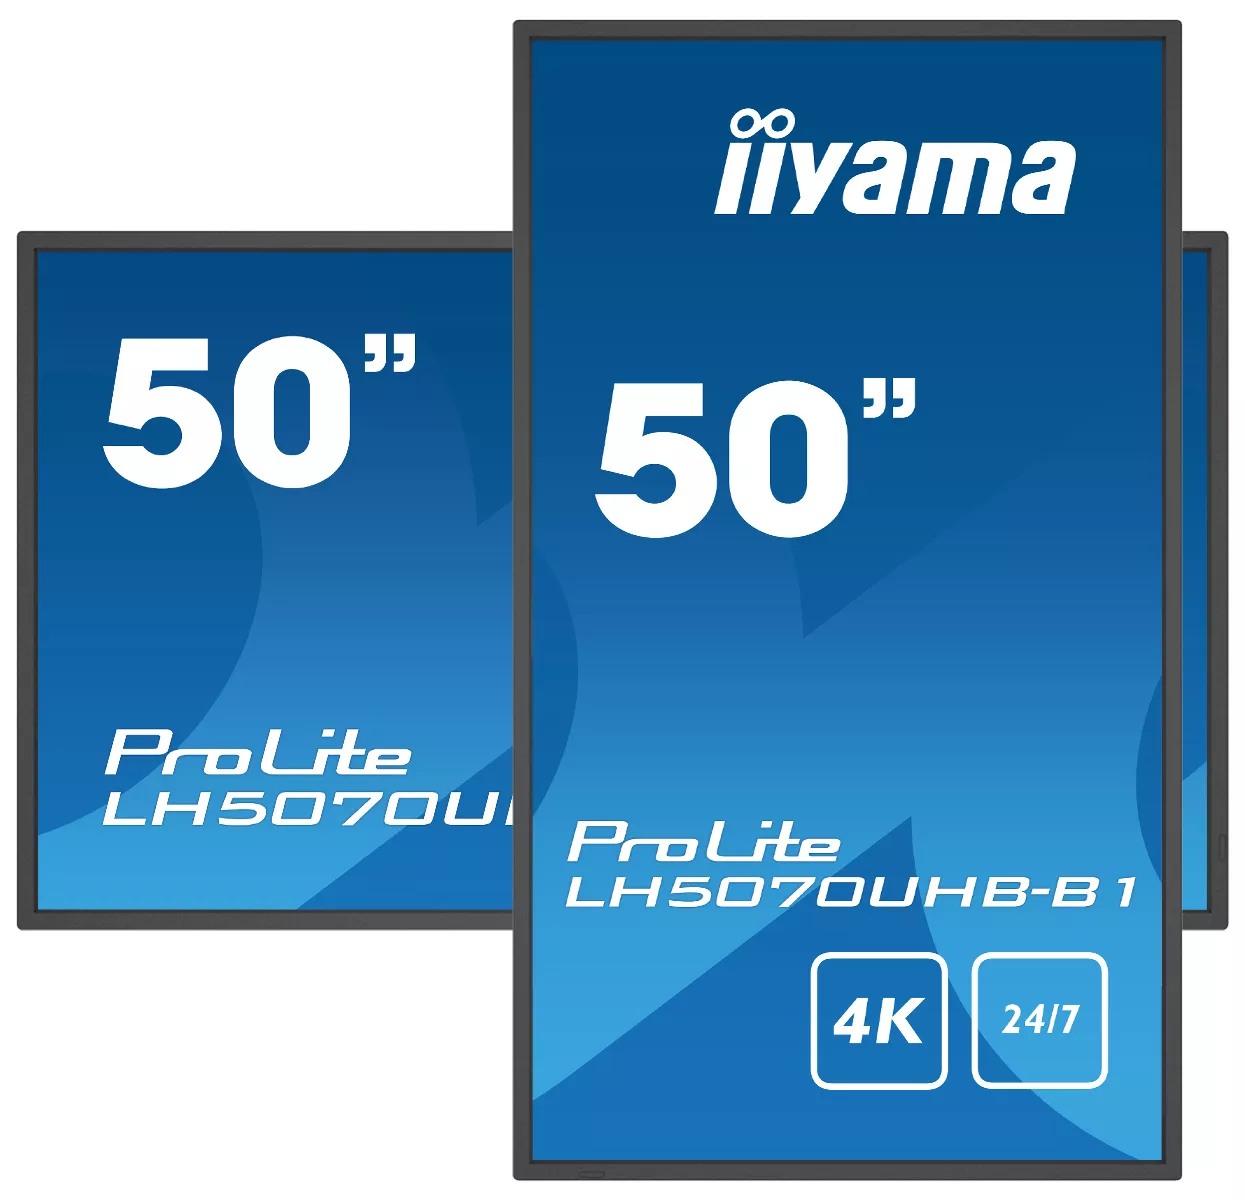 Vente iiyama LH5070UHB-B1 iiyama au meilleur prix - visuel 4